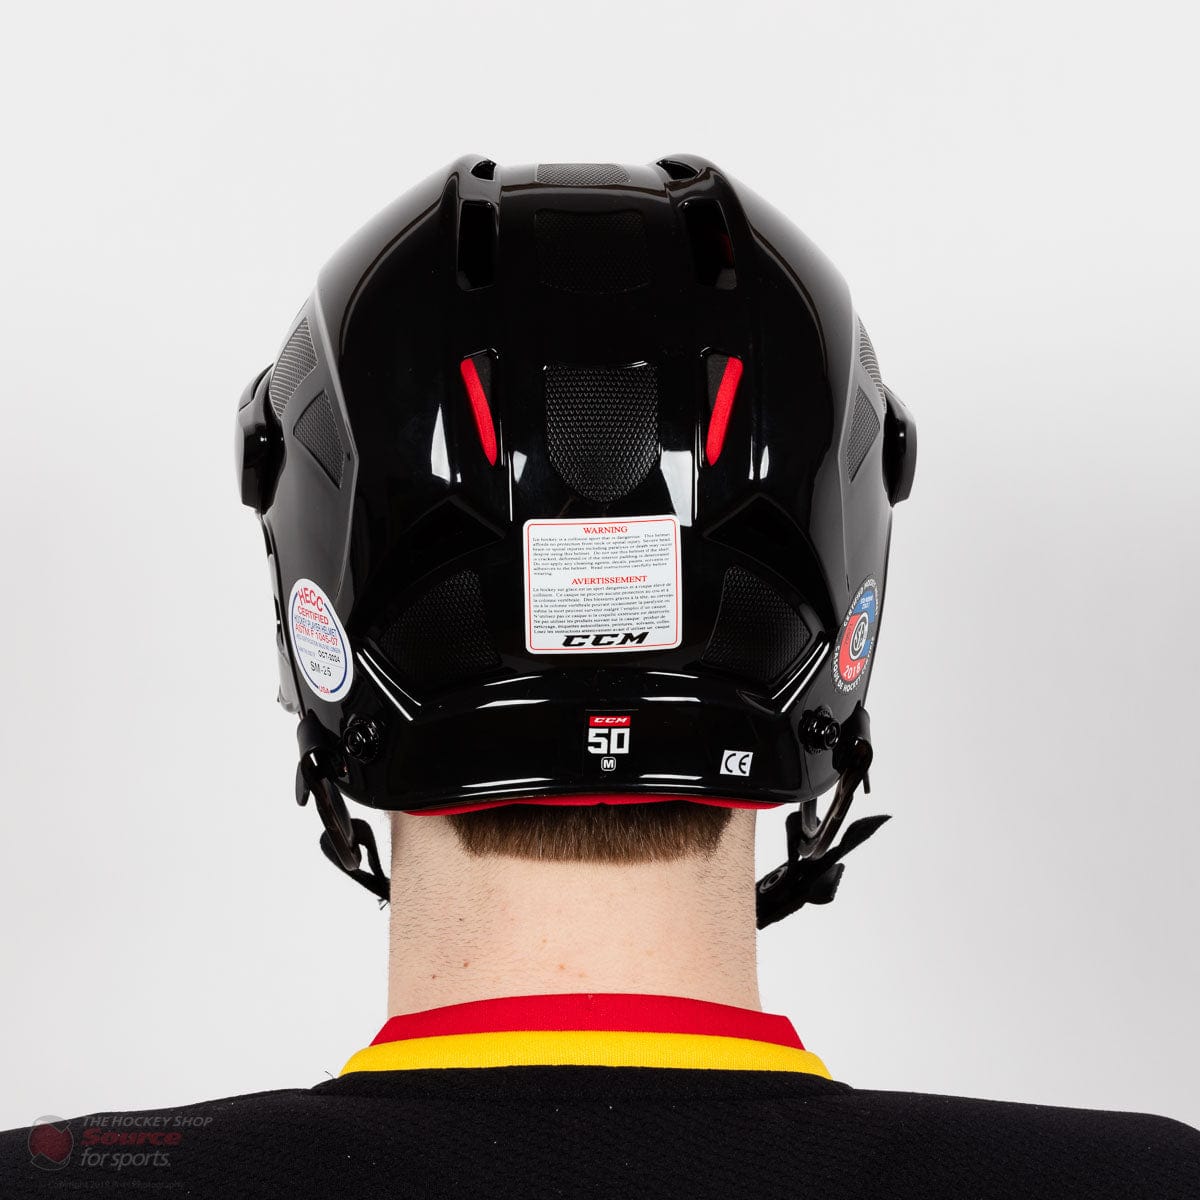 CCM 50 Hockey Helmet